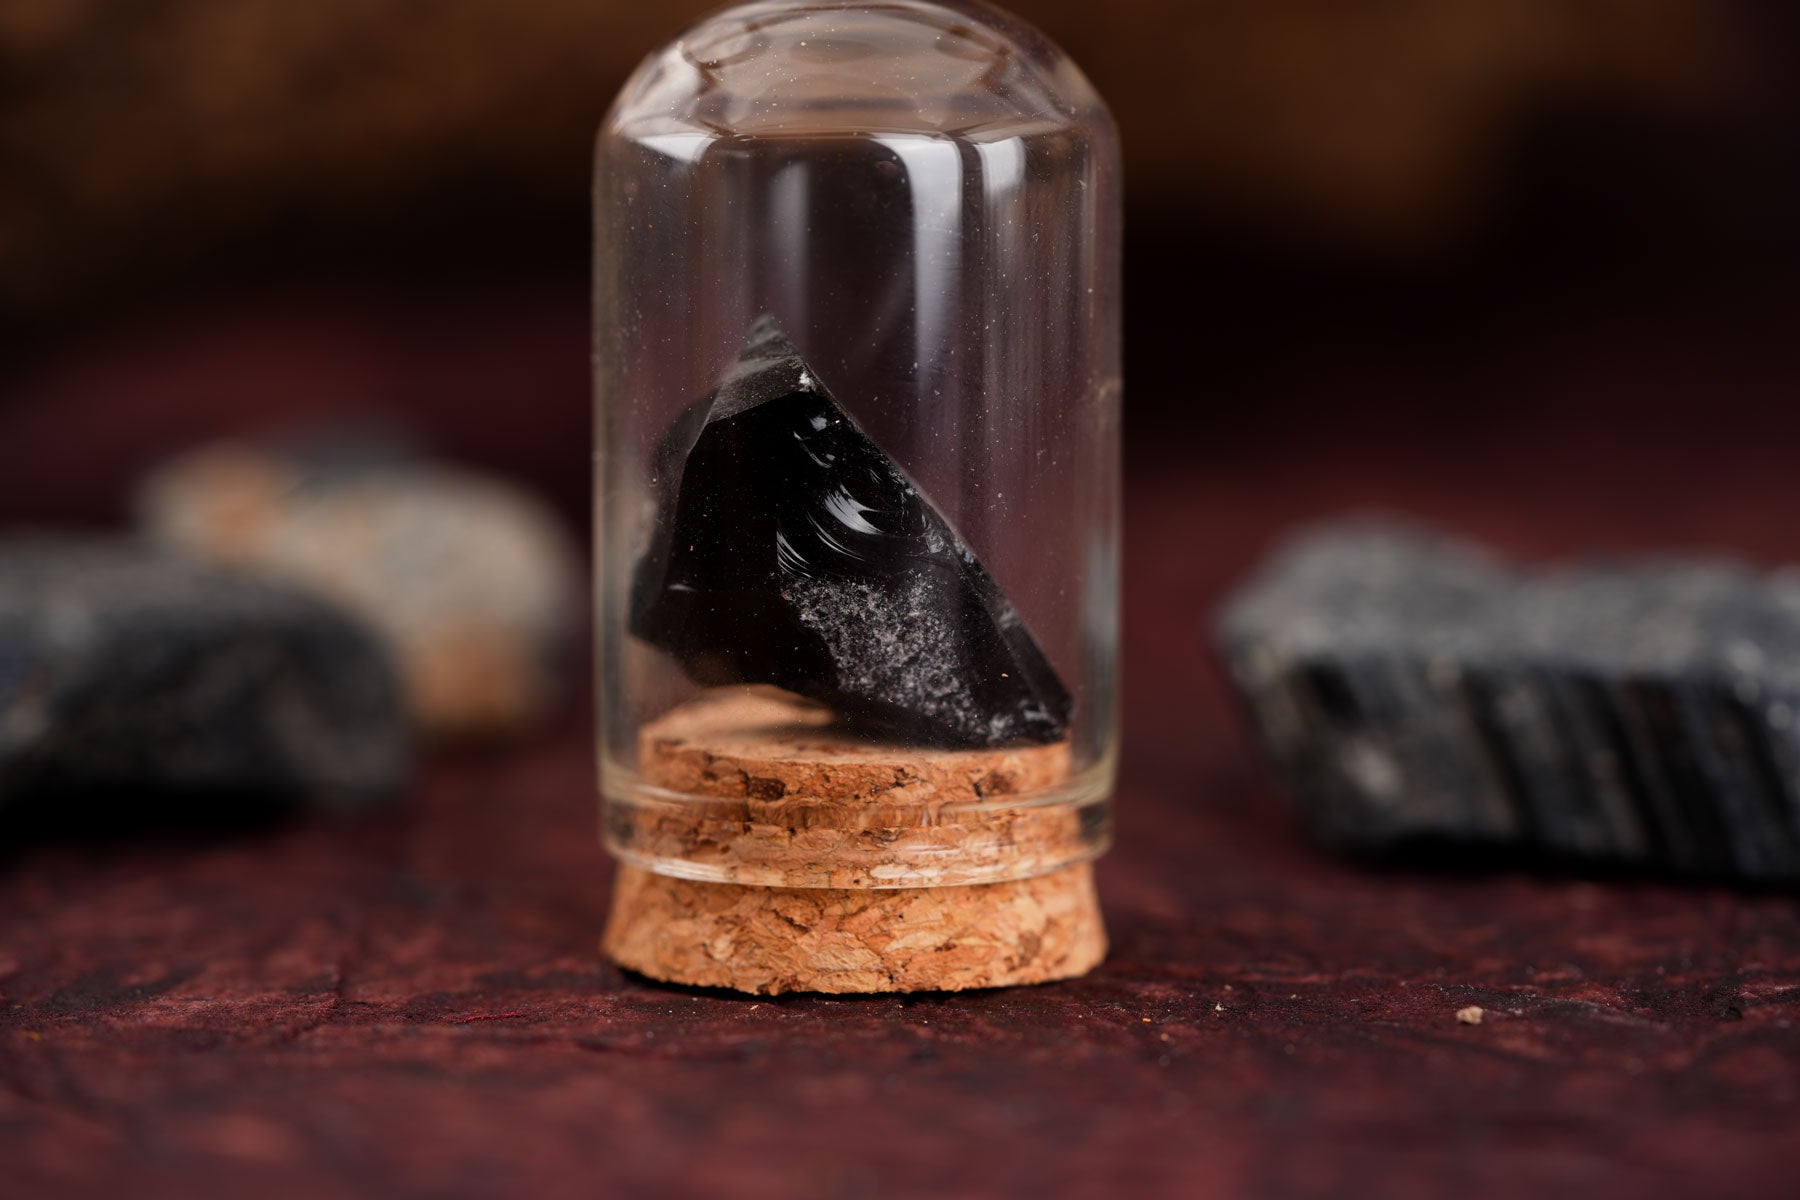 Black Obsidian Raw Stone